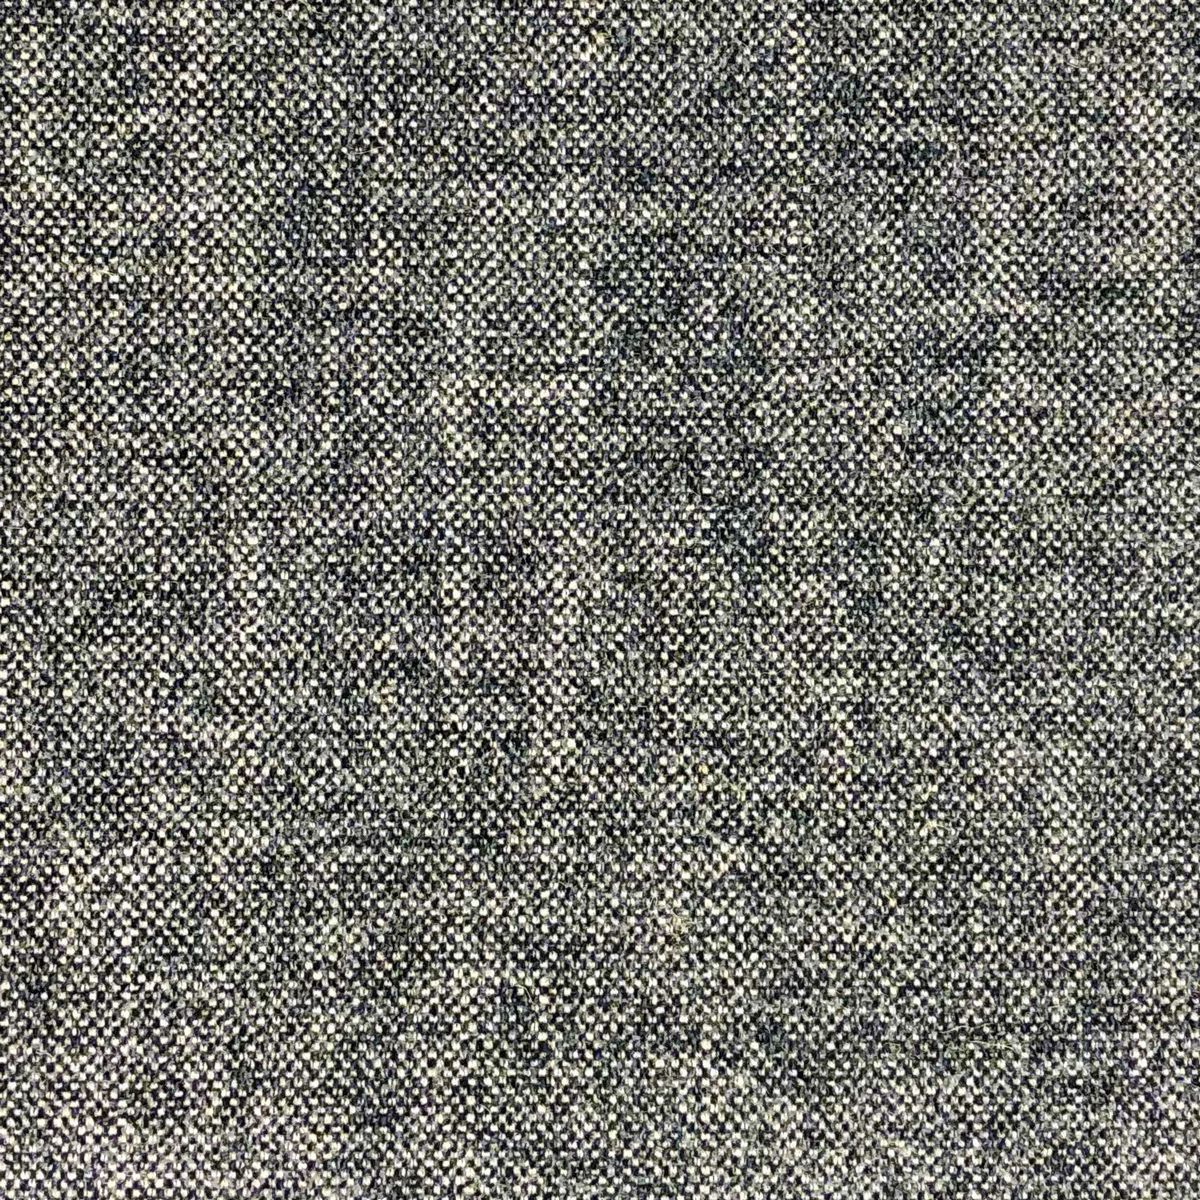 Merino Charcoal Fabric by Chatham Glyn